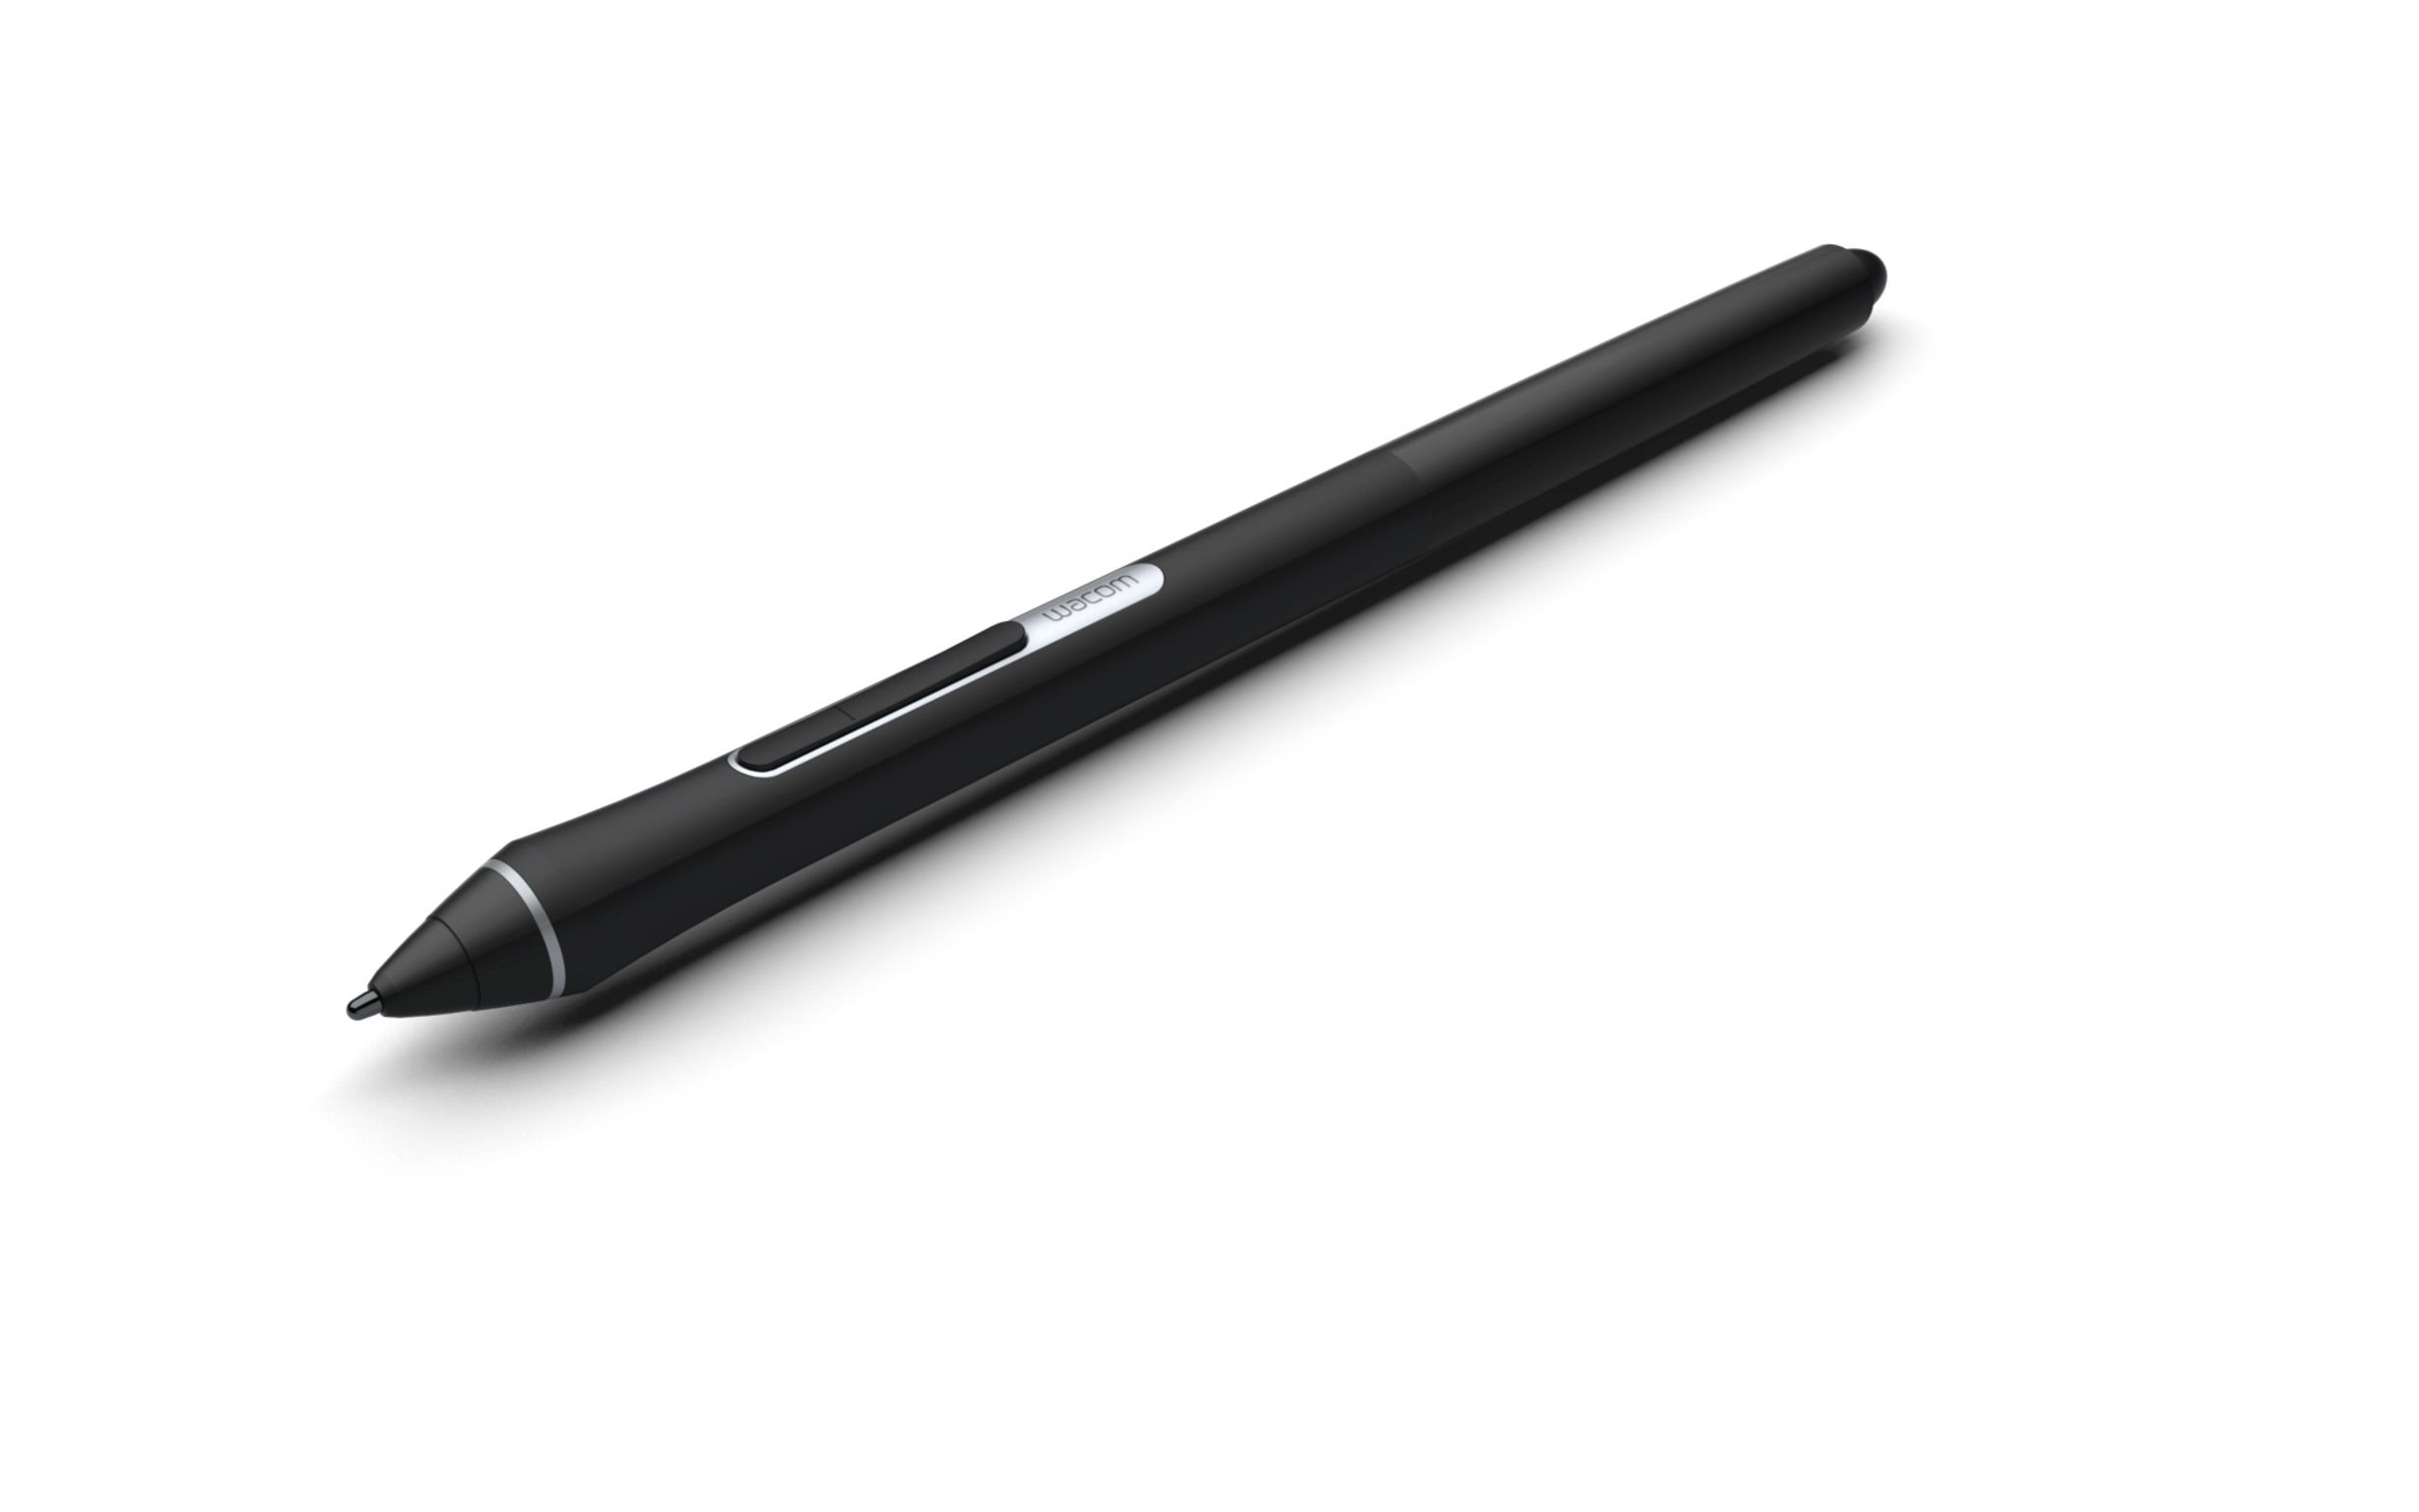 iF Design - Wacom Pro Pen Slim